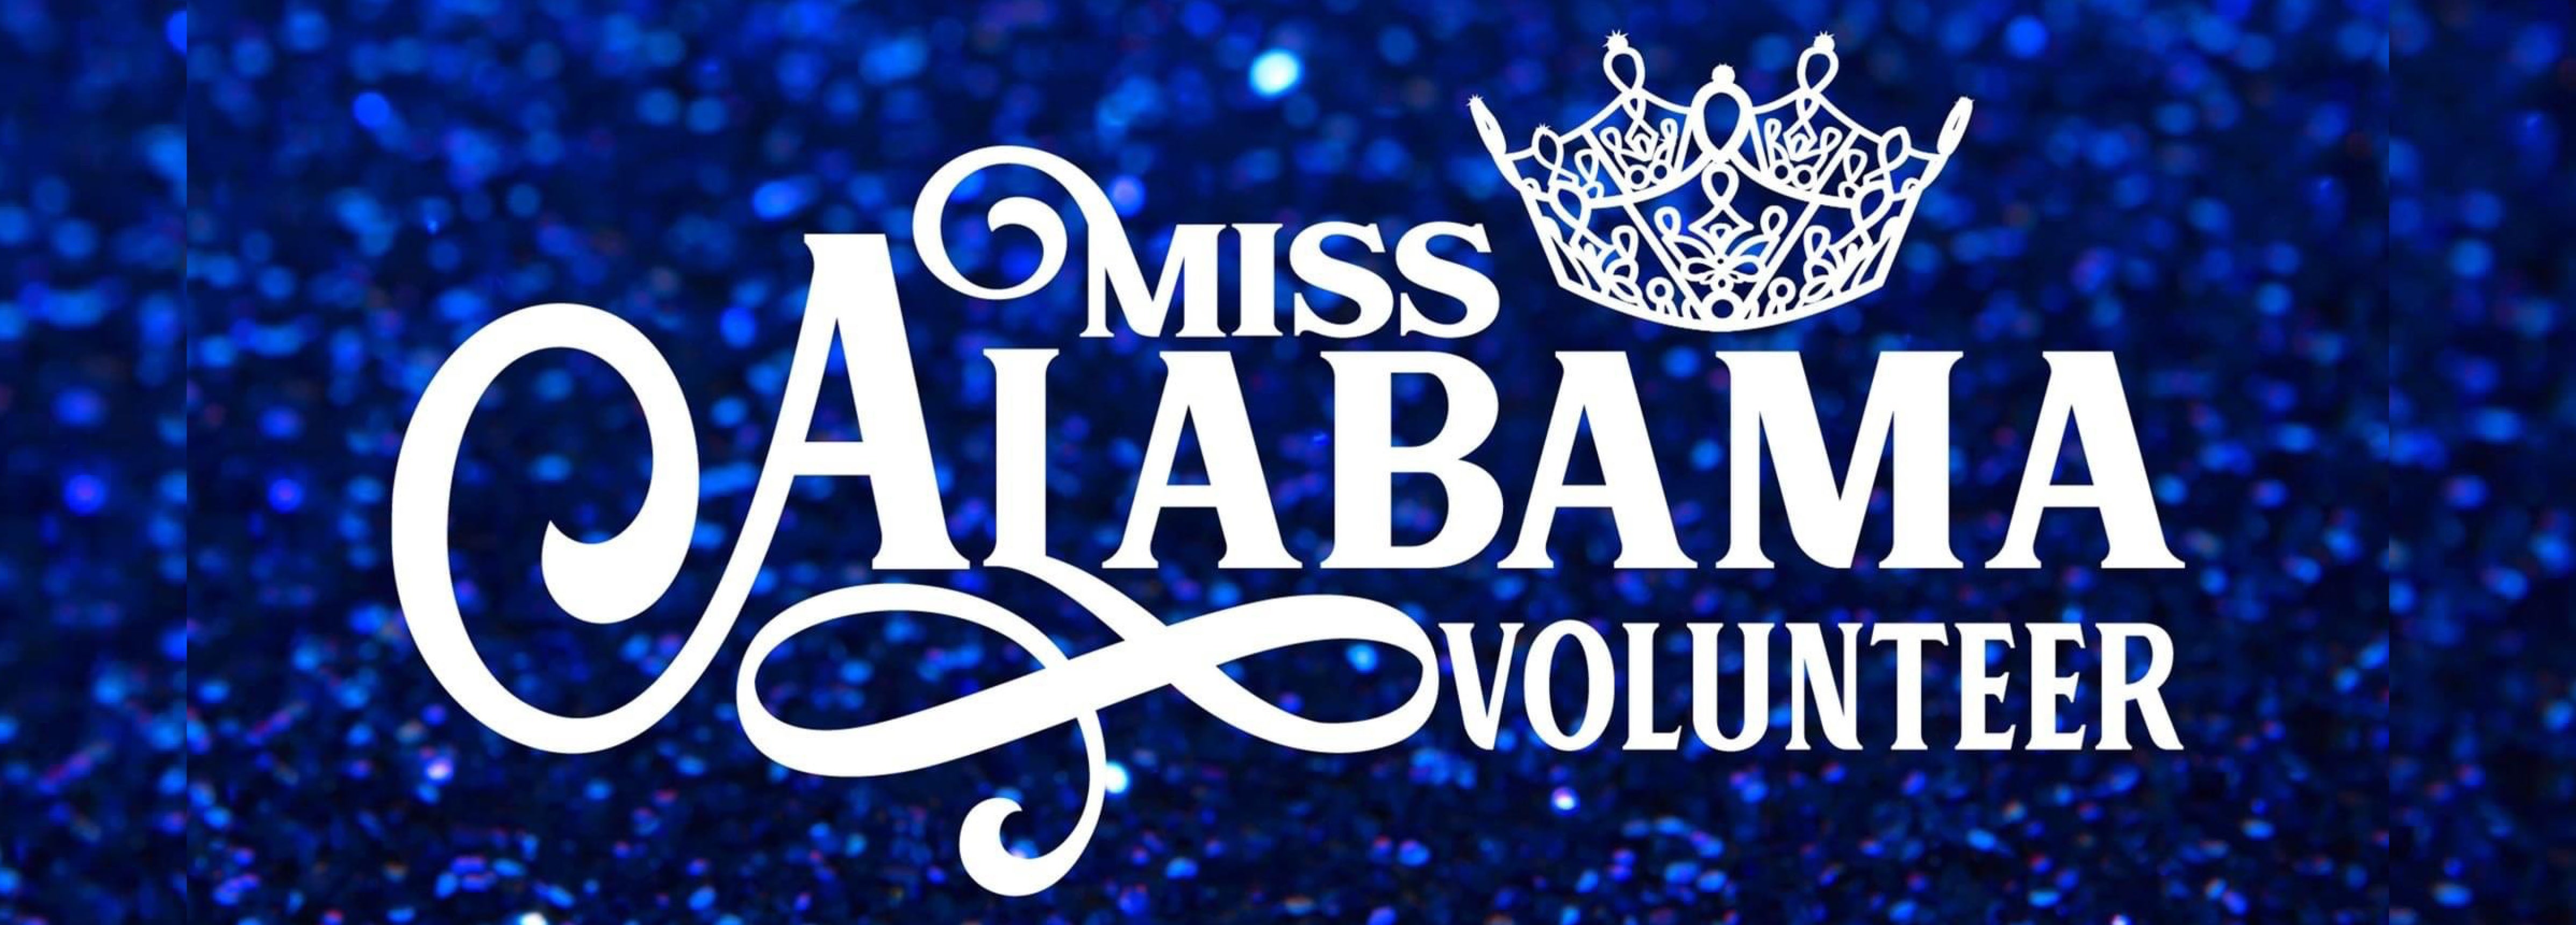 Miss Alabama Volunteer Presents Miss Alabama Volunteer Preliminary